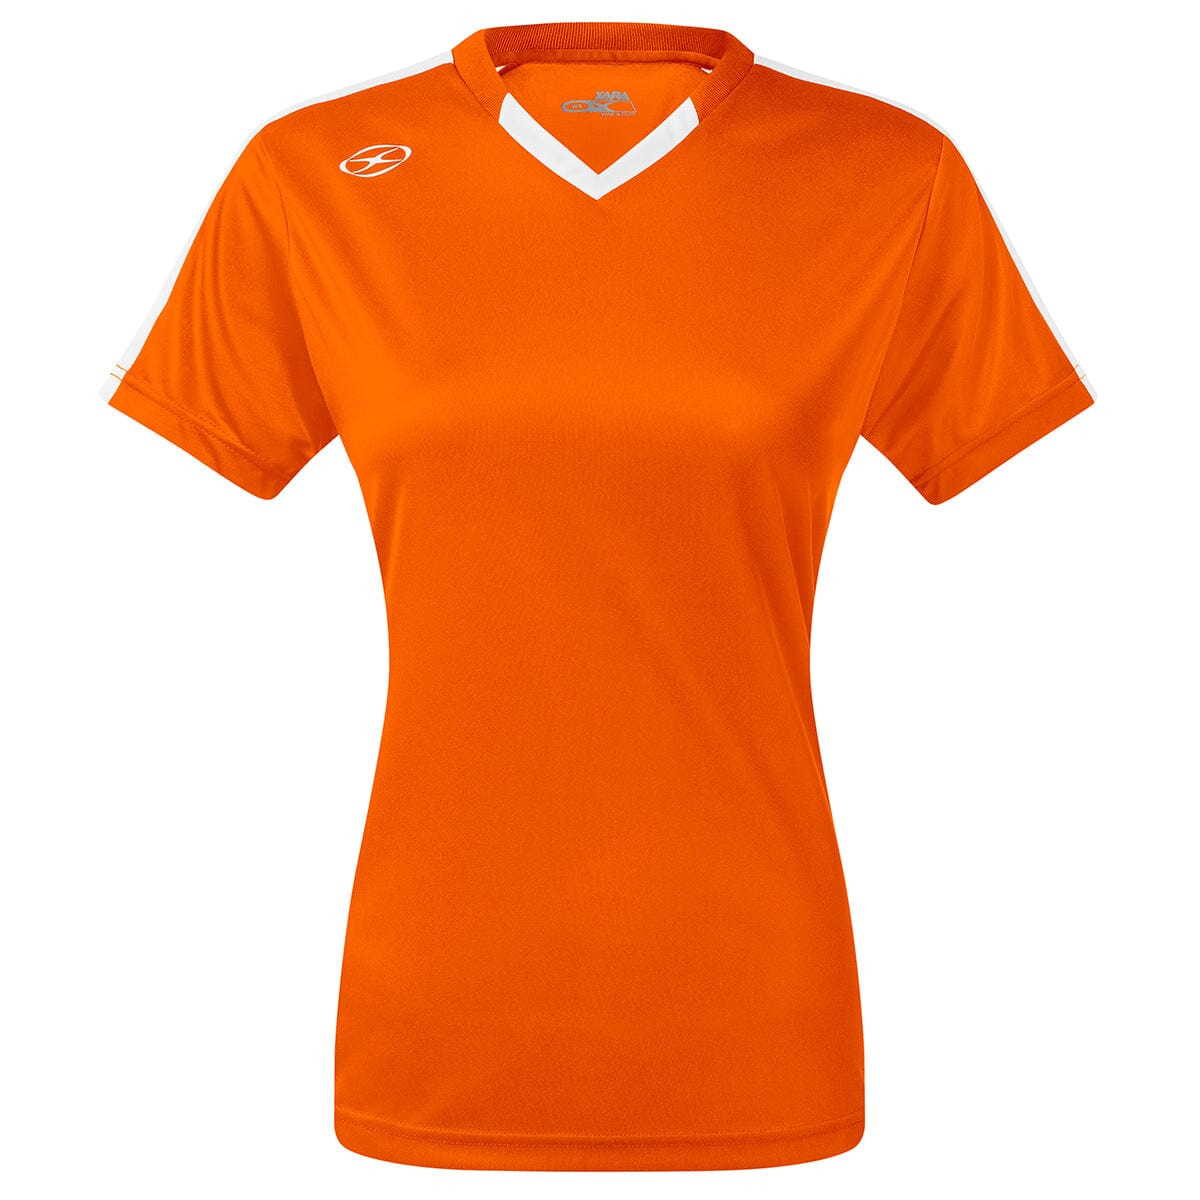 Britannia Jersey - Home Colors - Female Shirt Xara Soccer Orange/White Womens Youth Medium 